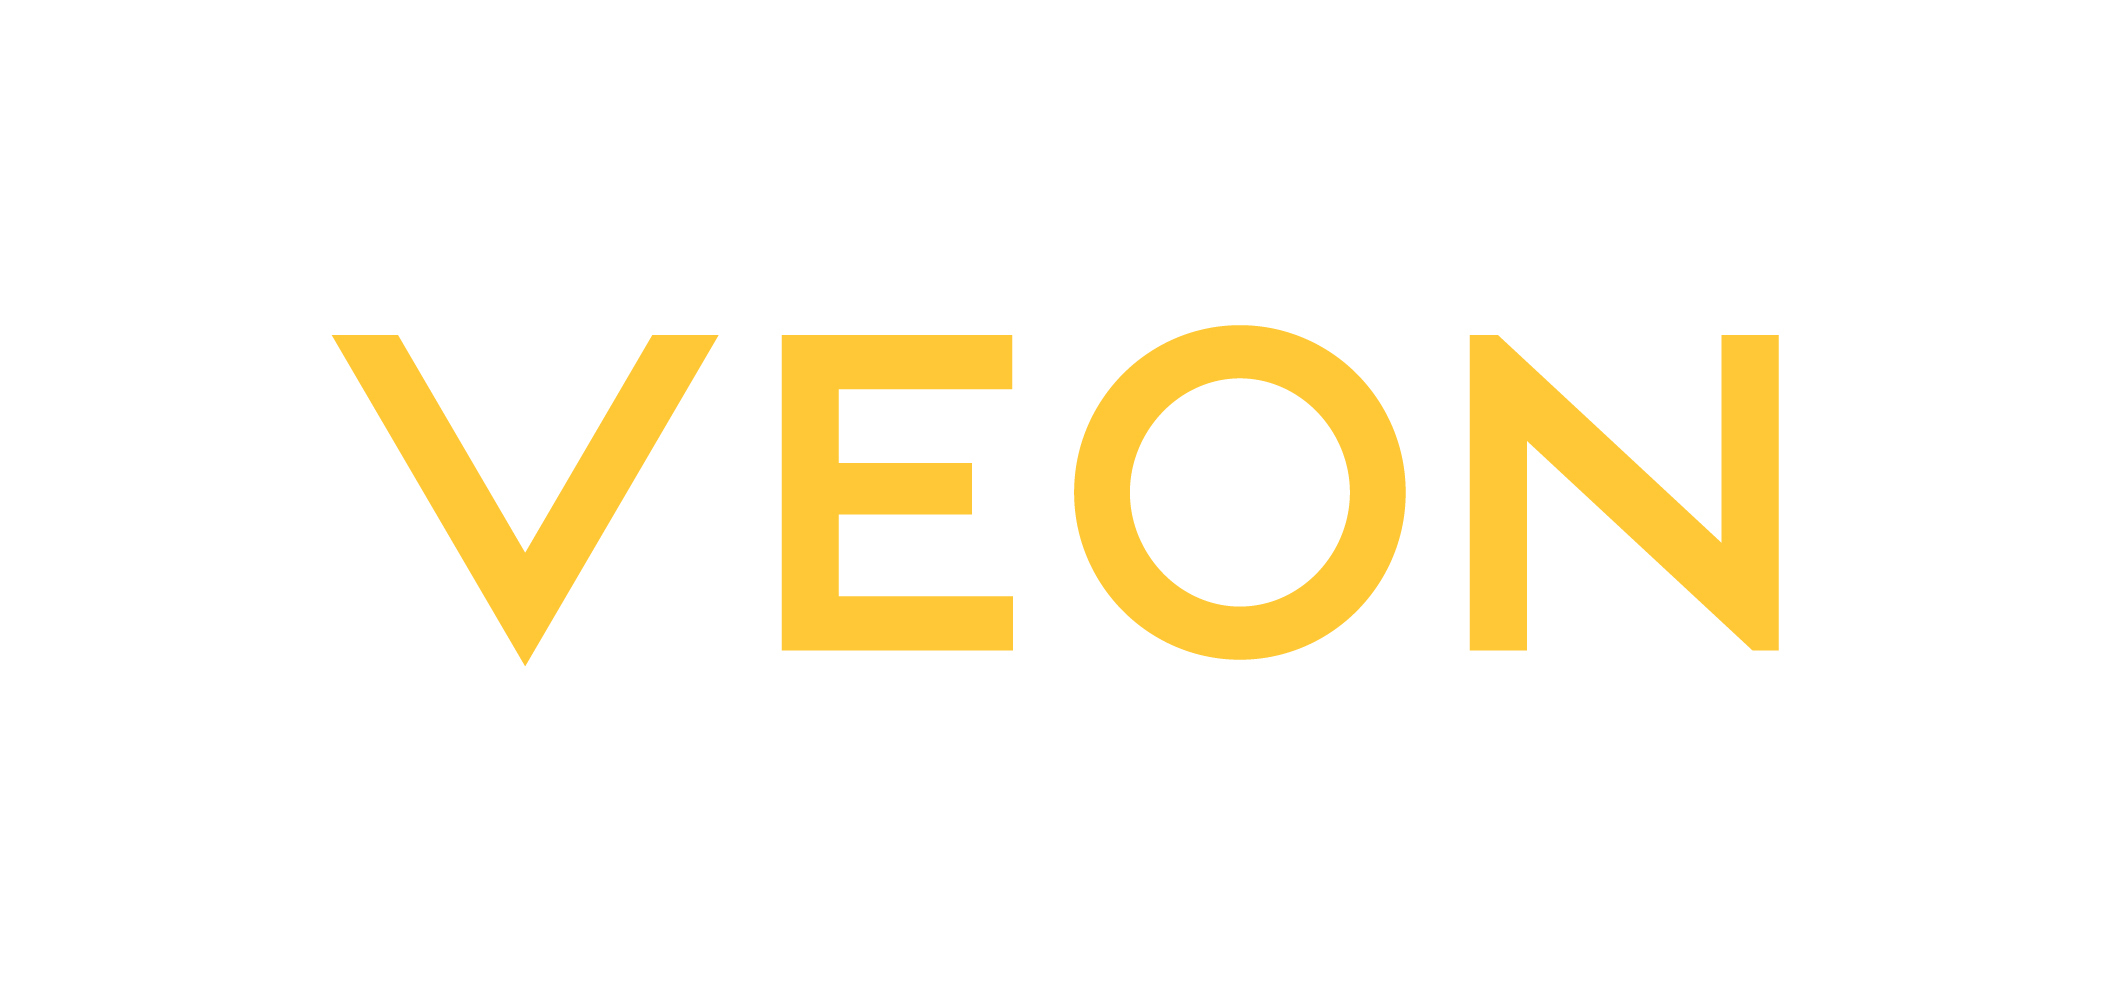 Veon logo yellow